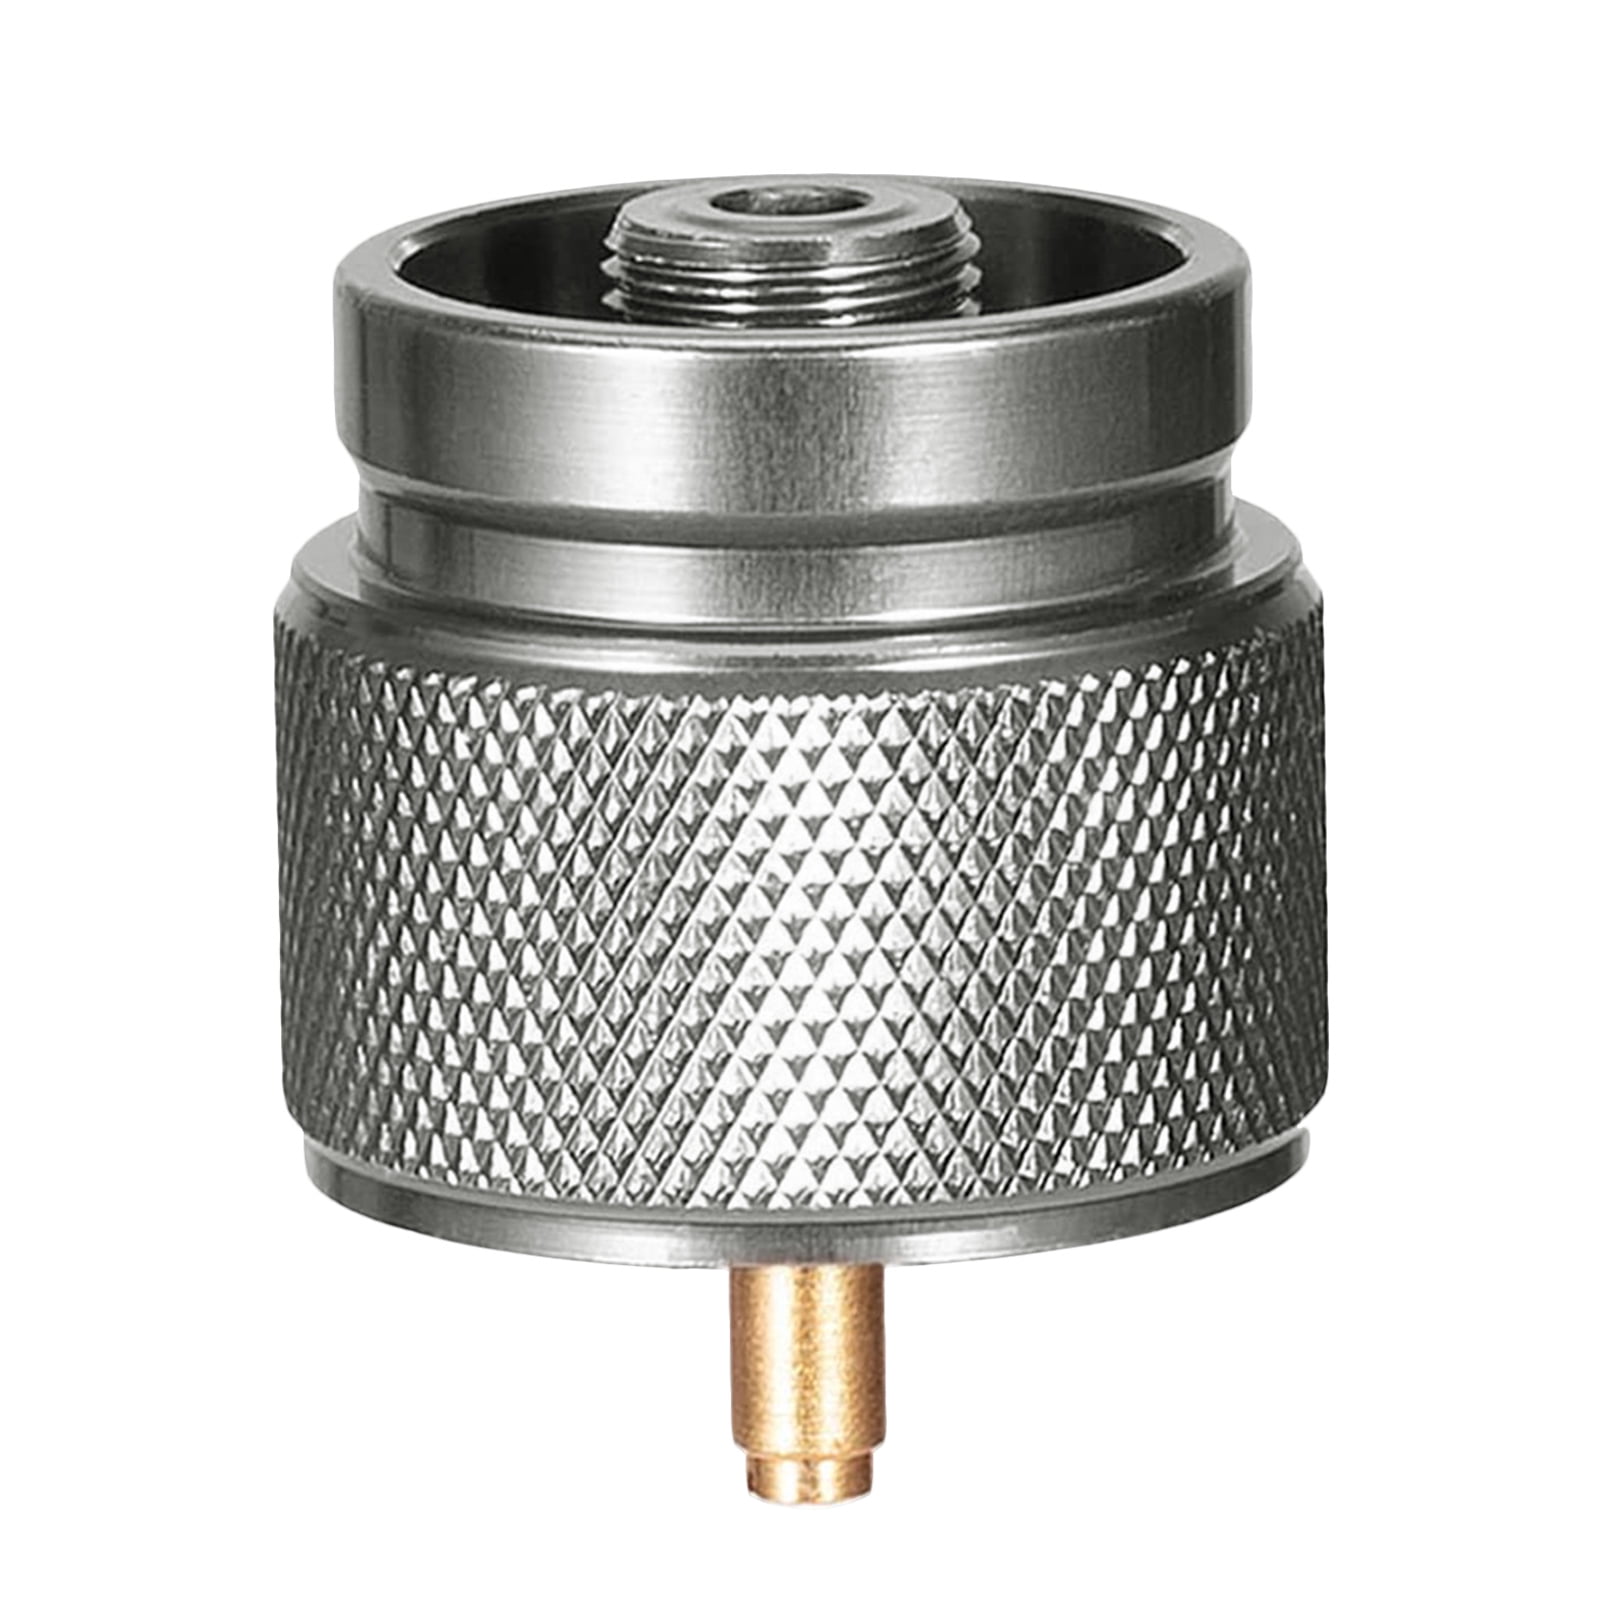 Metal Gas Tank Valve Convert Propane Cylinder Canister Adapter Outdoor Tool Kit 